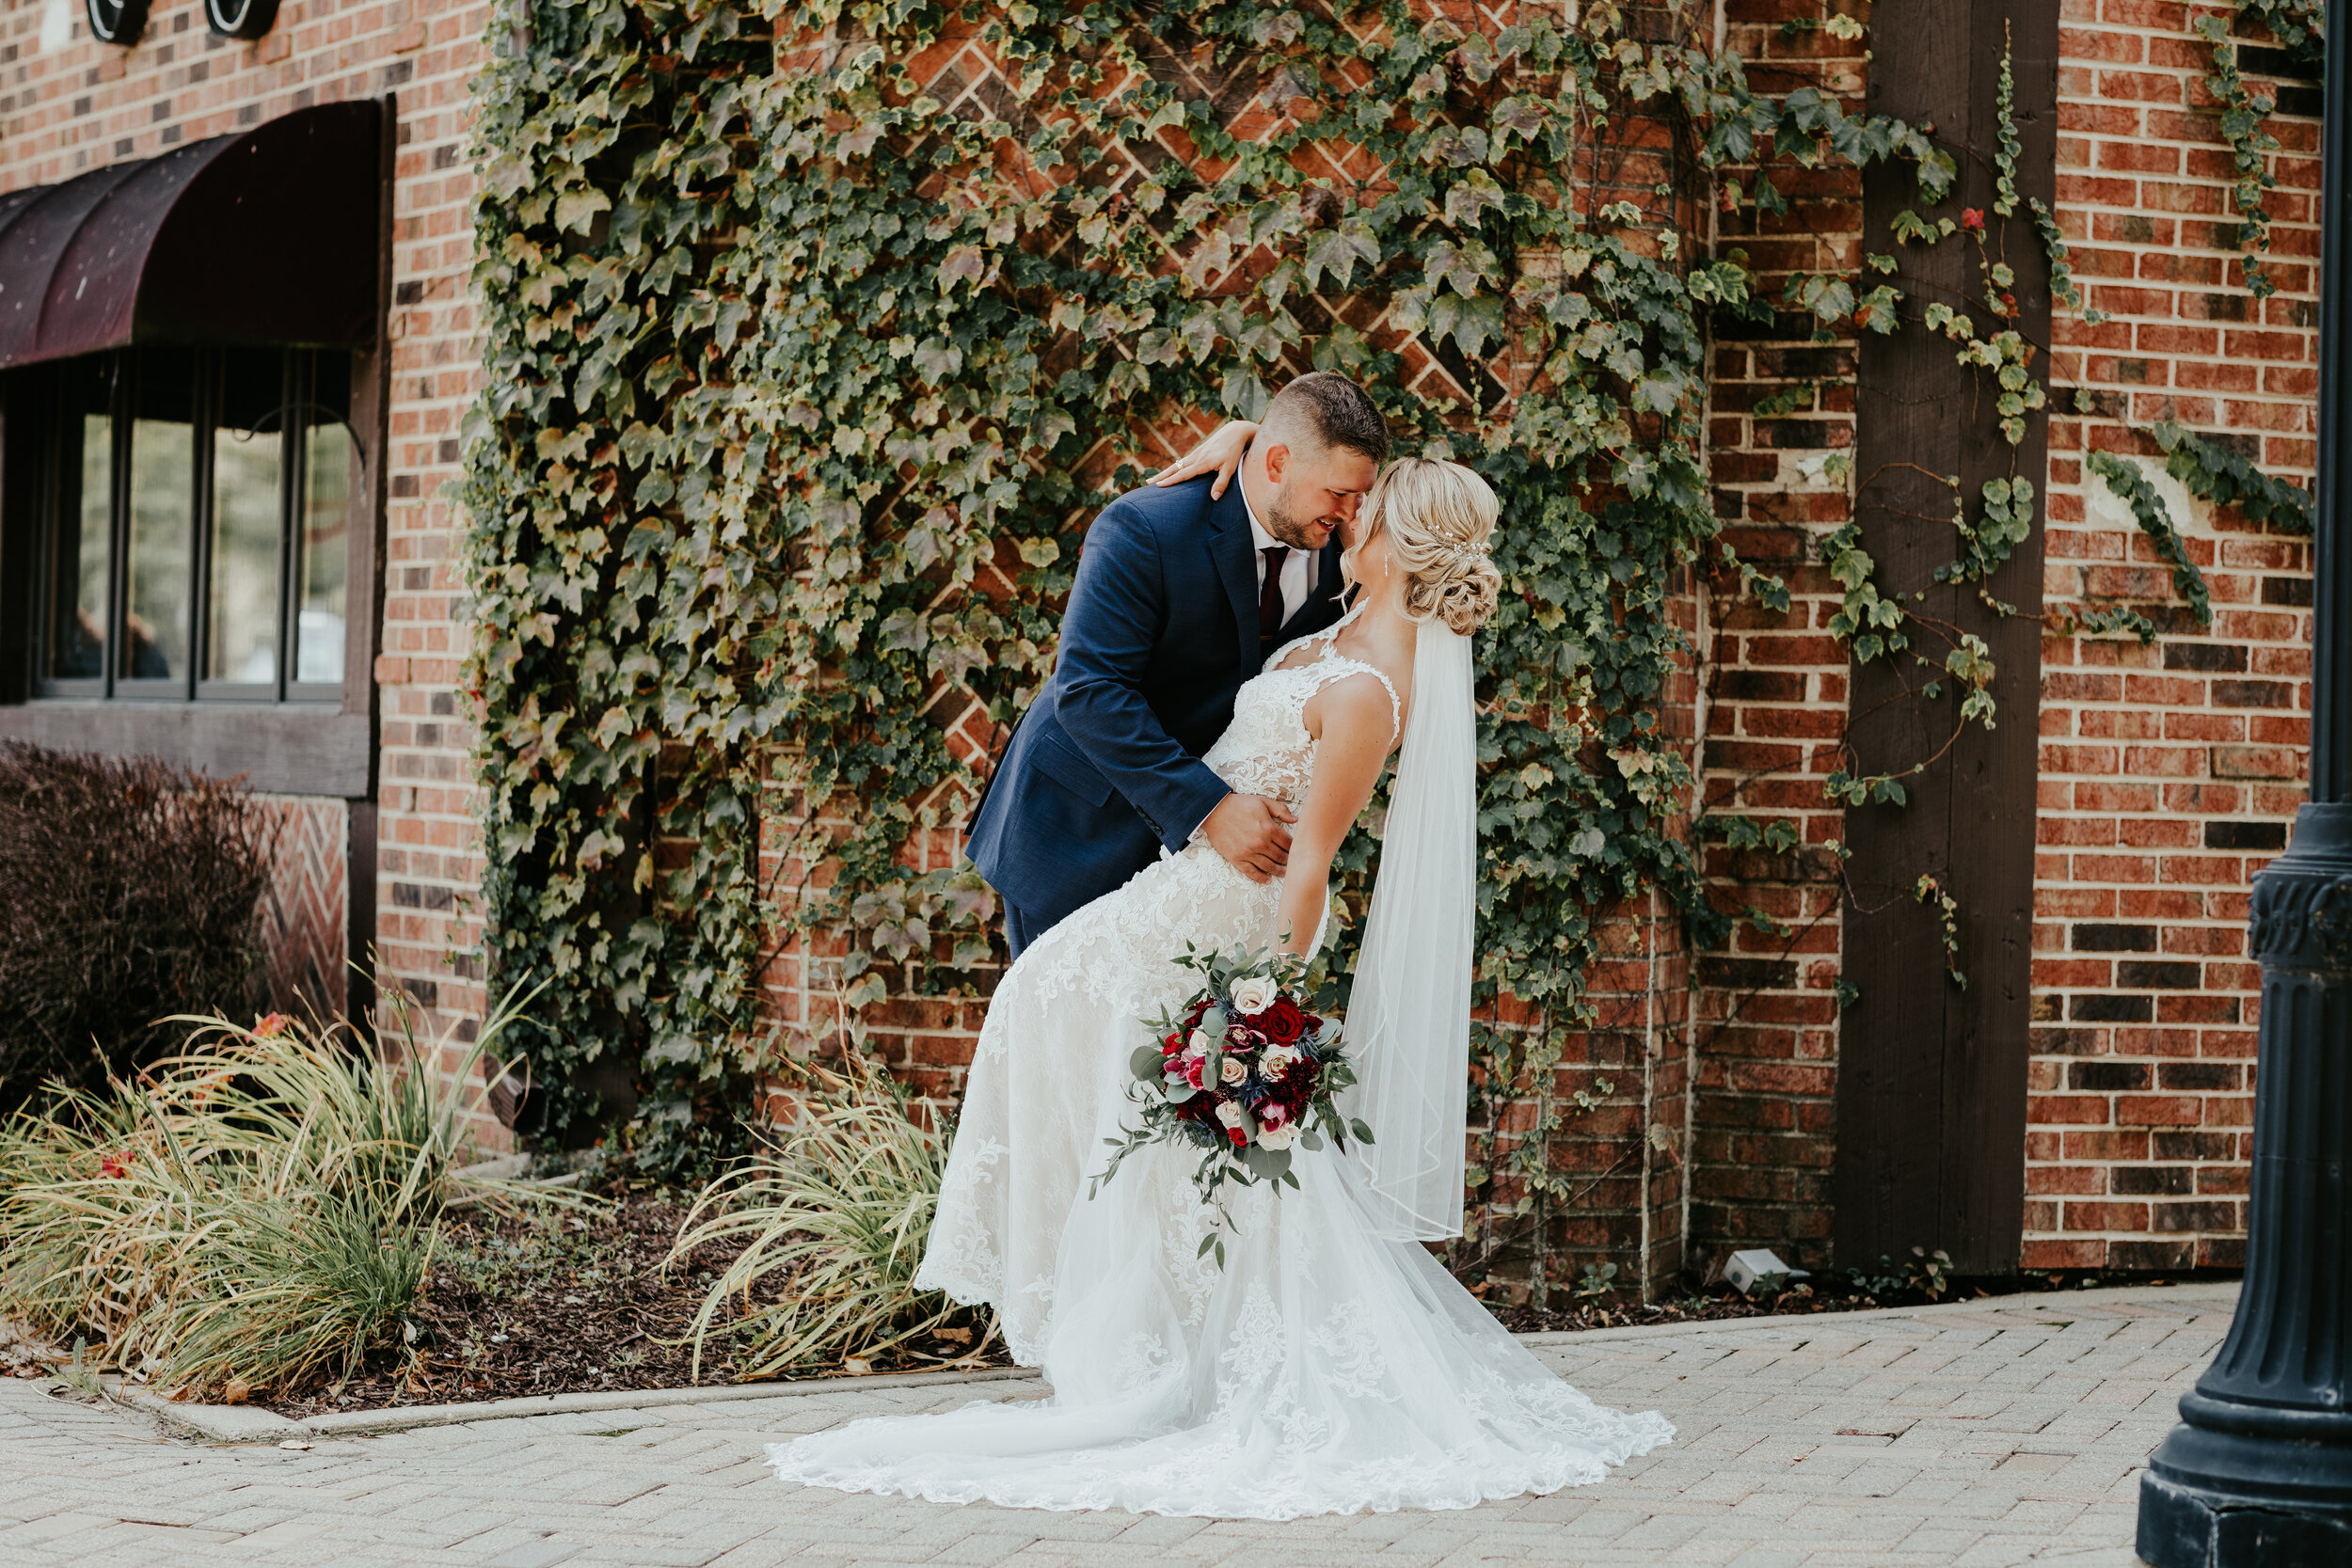 Bride + Groom Danielle Schury Photography Copyright 2019 (59).jpg